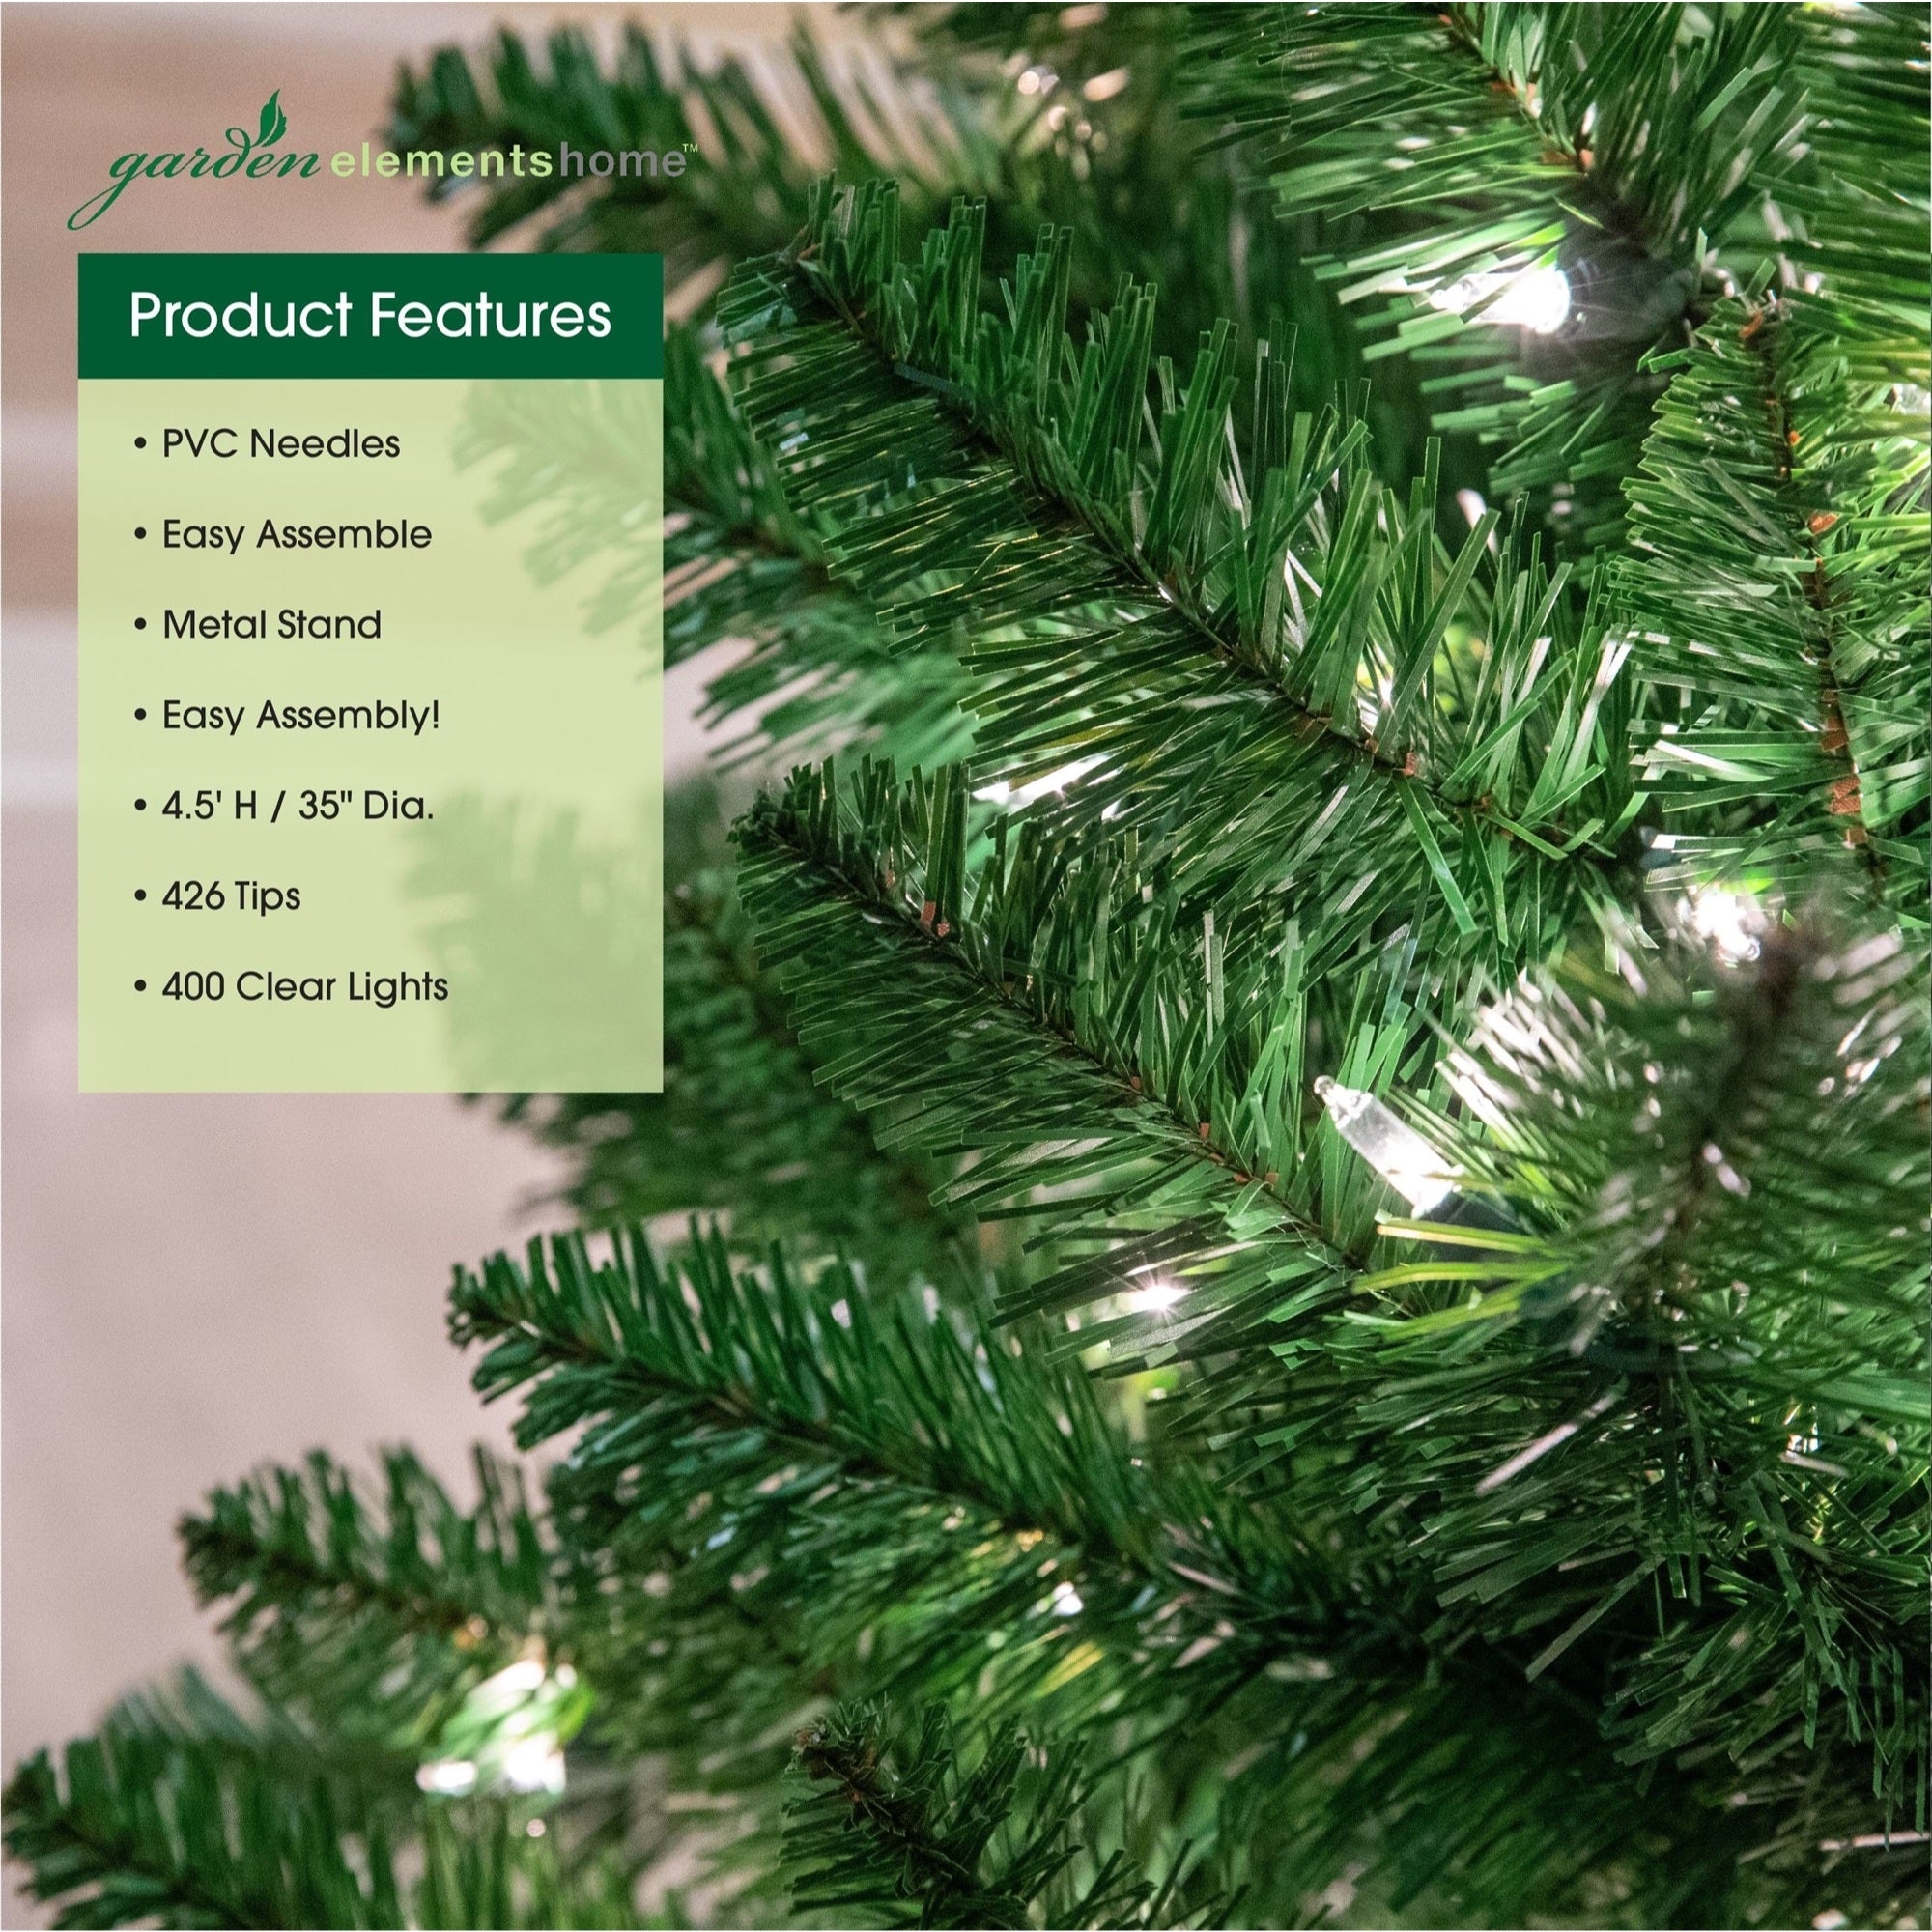 Garden Elements Artificial Pre-Lit Penn Spruce Christmas Tree, 2462 Tips, 1600 Clear Lights, 9 ft